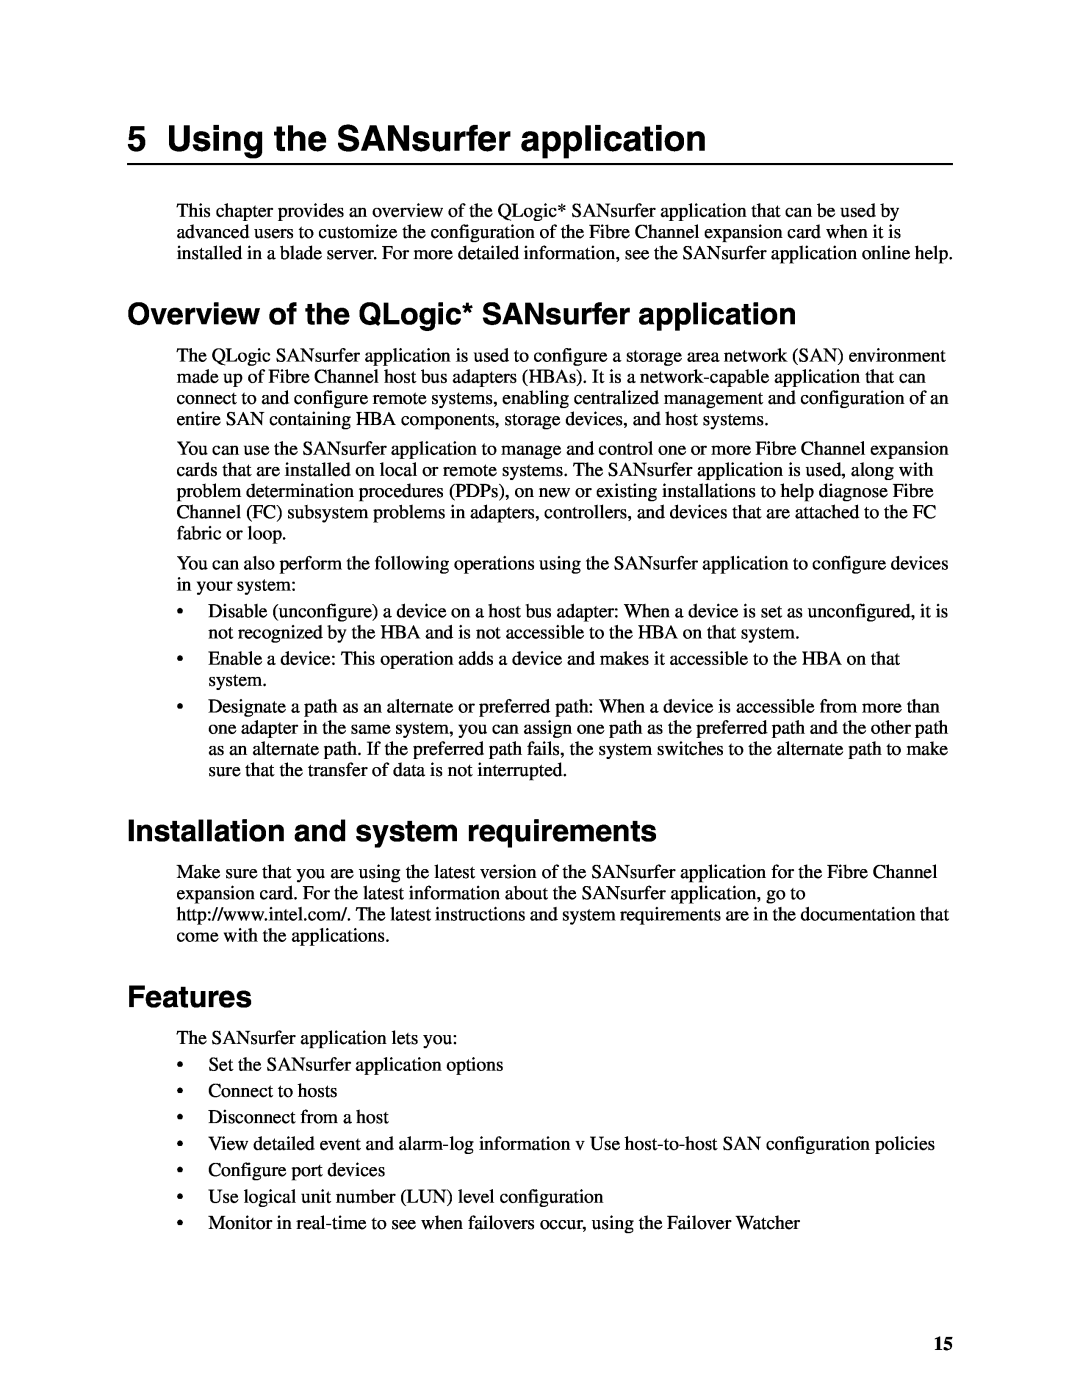 Intel SEBFCM4 manual Using the SANsurfer application, Overview of the QLogic* SANsurfer application, Features 